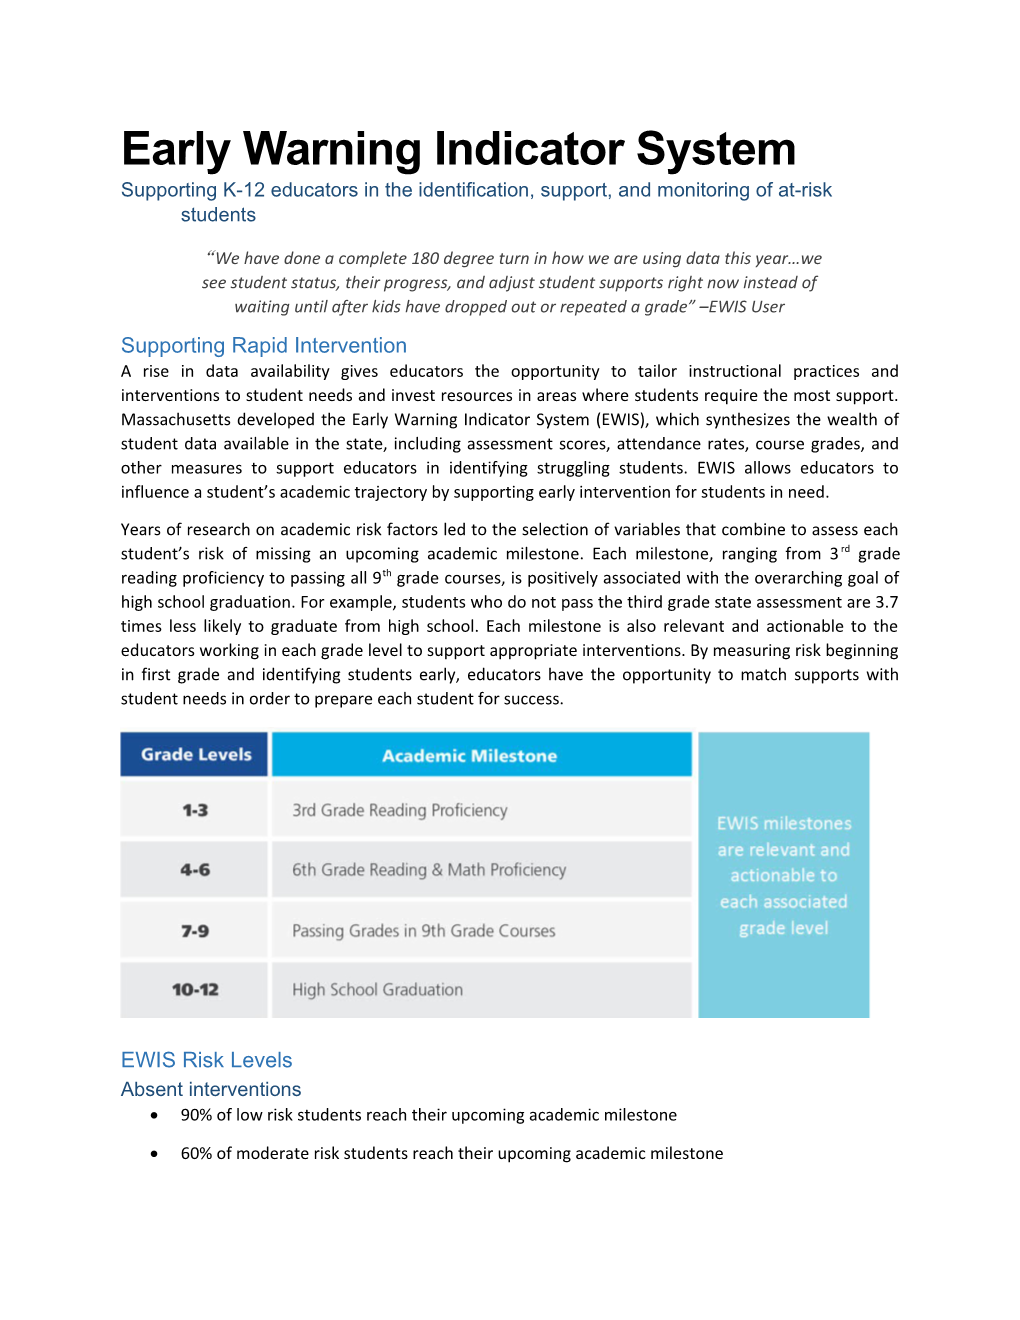 Early Warning Indicator System Project Spotlight